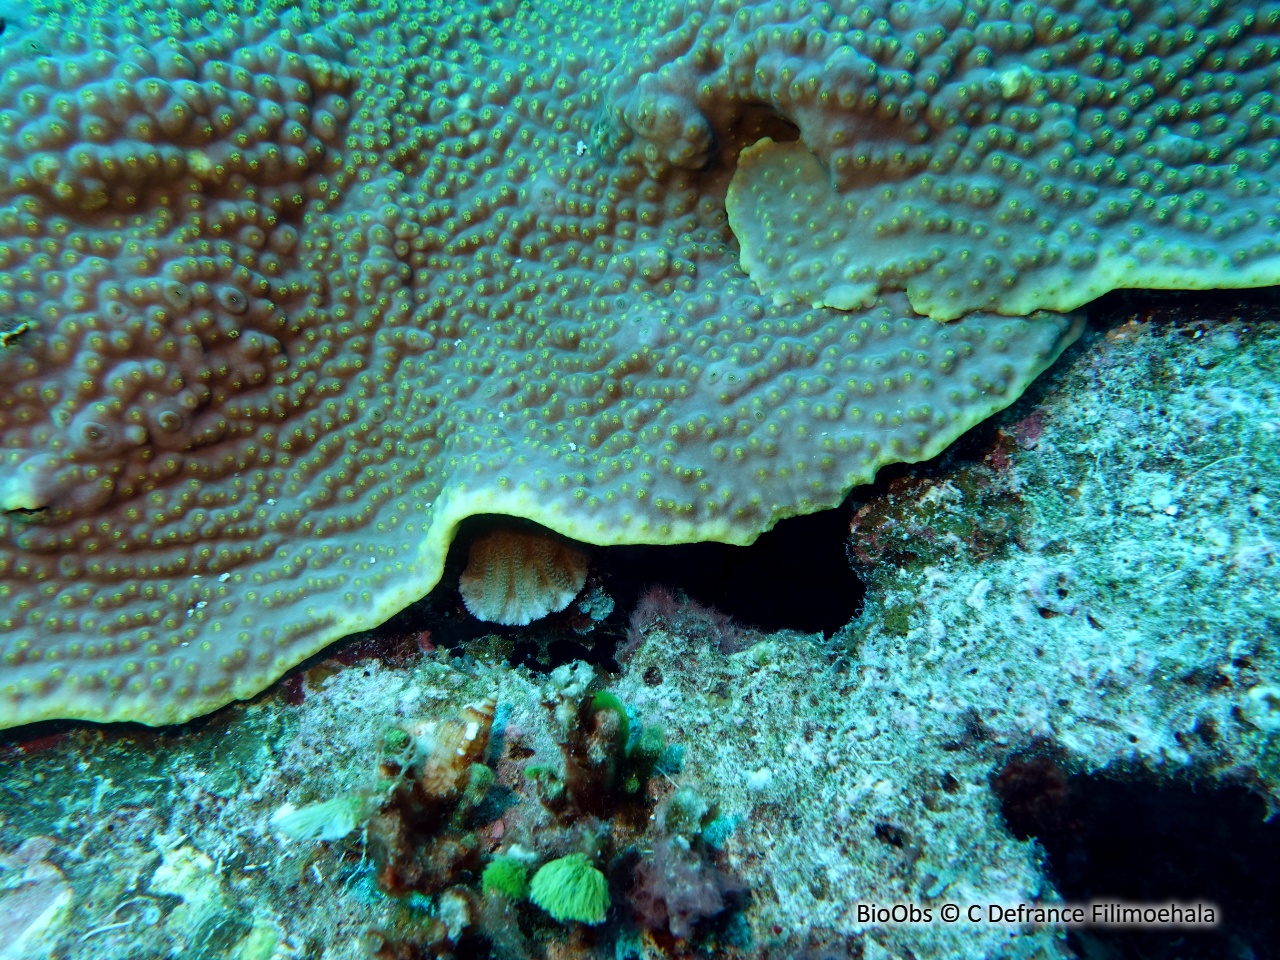 Corail-feuille rugueuse - Echinophyllia aspera - C Defrance Filimoehala - BioObs